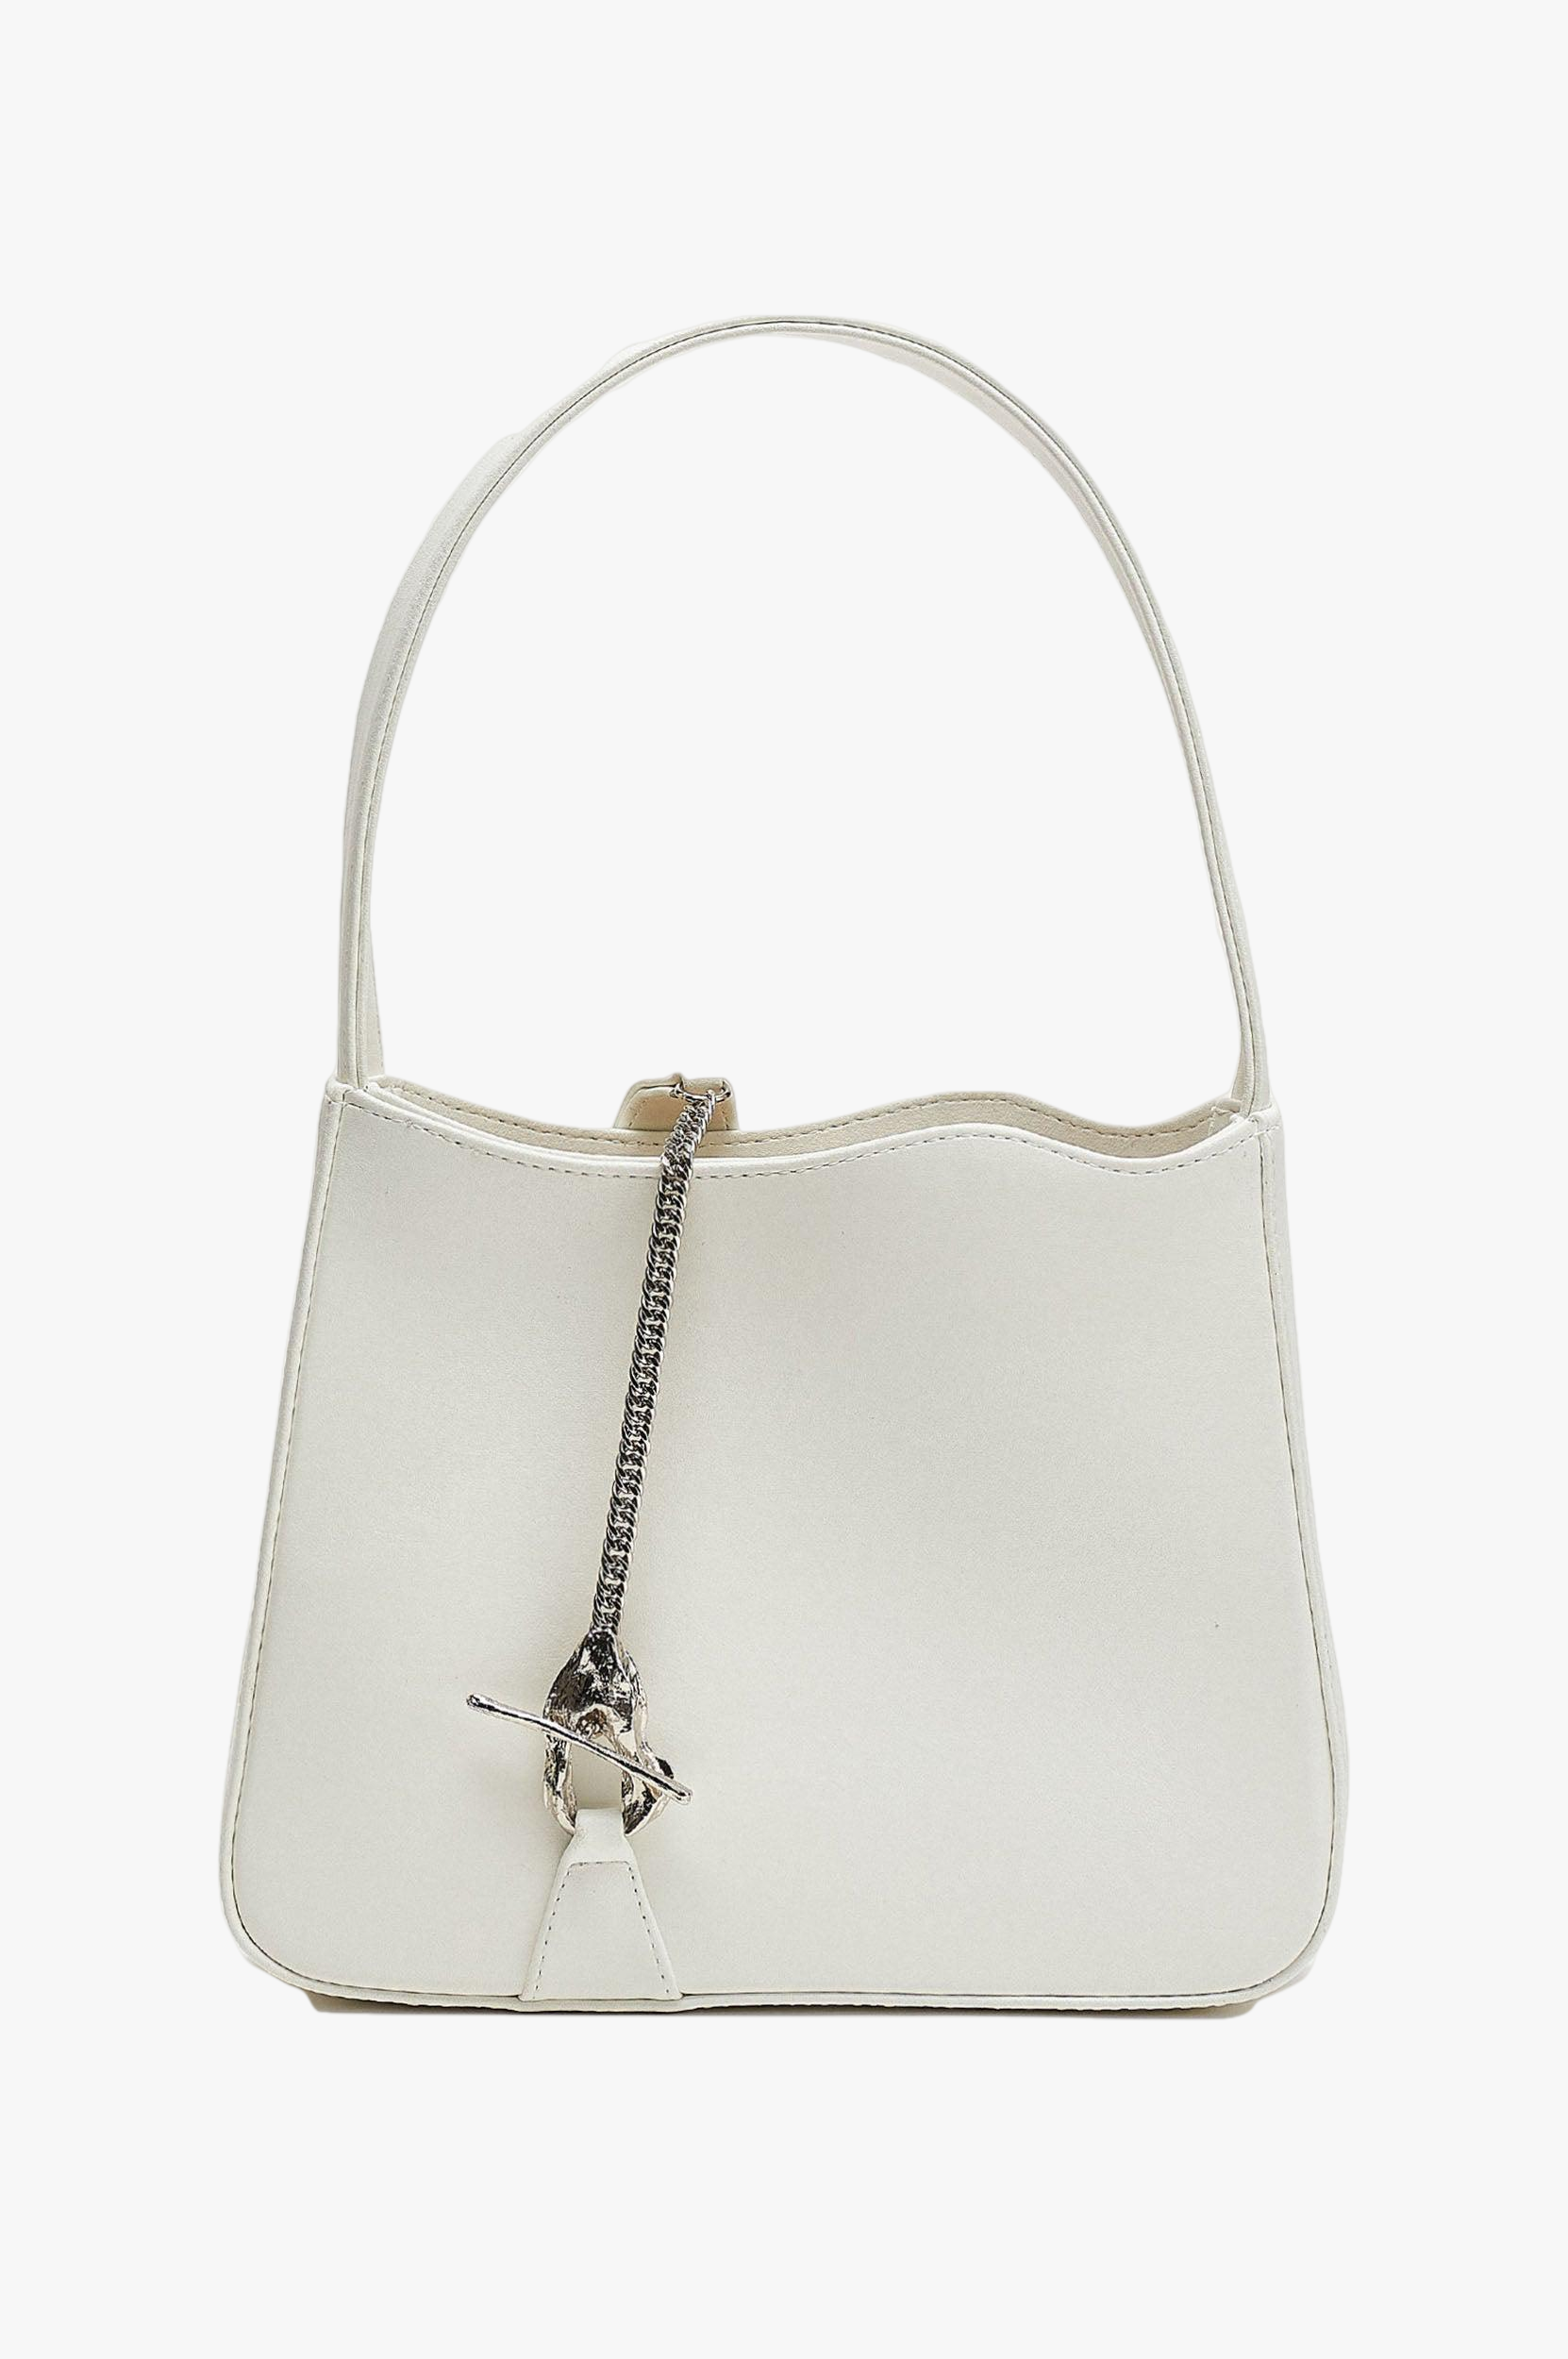 Aphrodite mini shoulder bag in white leather